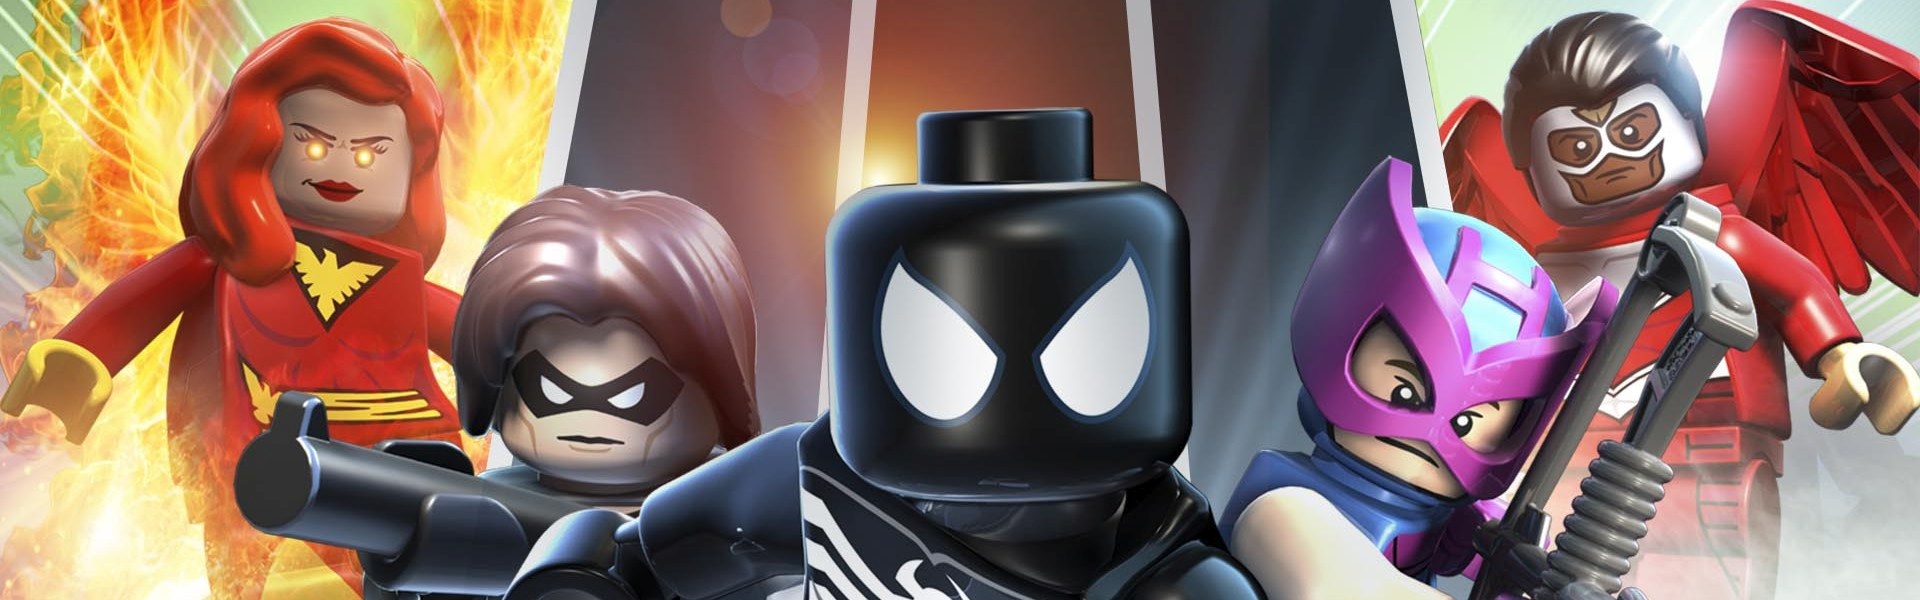 LEGO Marvel Super Heroes - Super Pack Steam key cheap